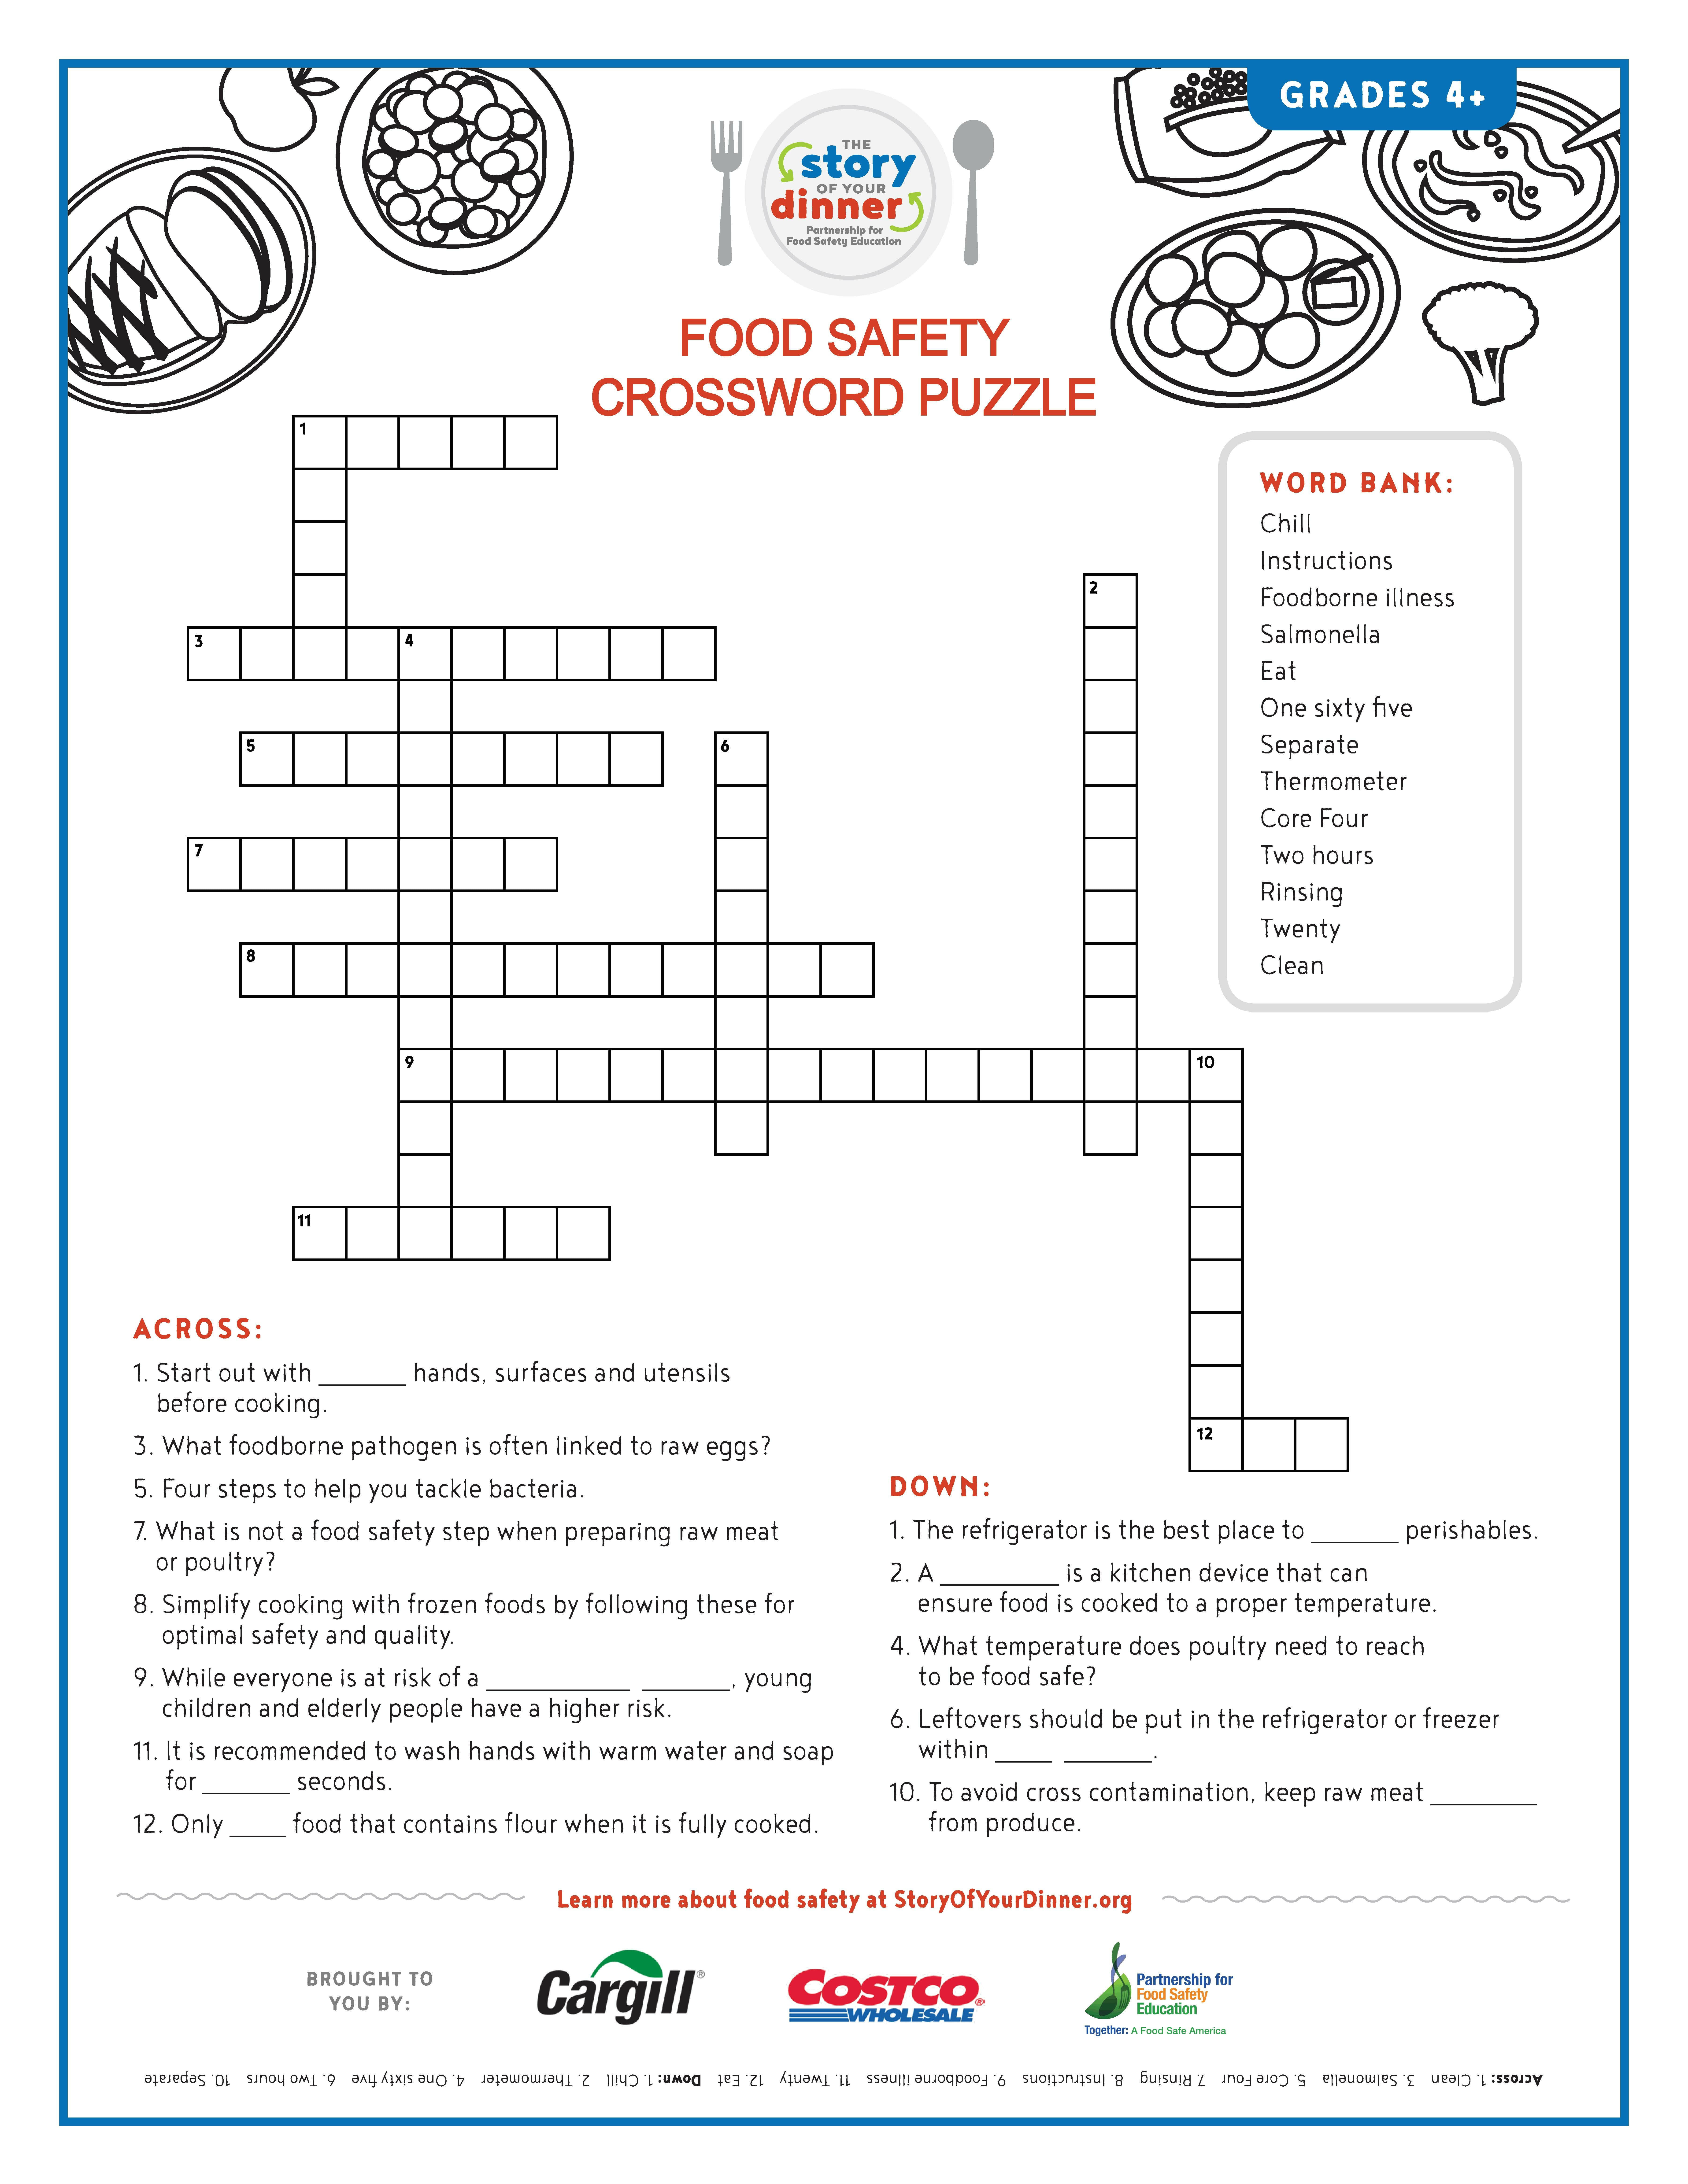 Crossword Puzzle Activity Sheet Thumbnail